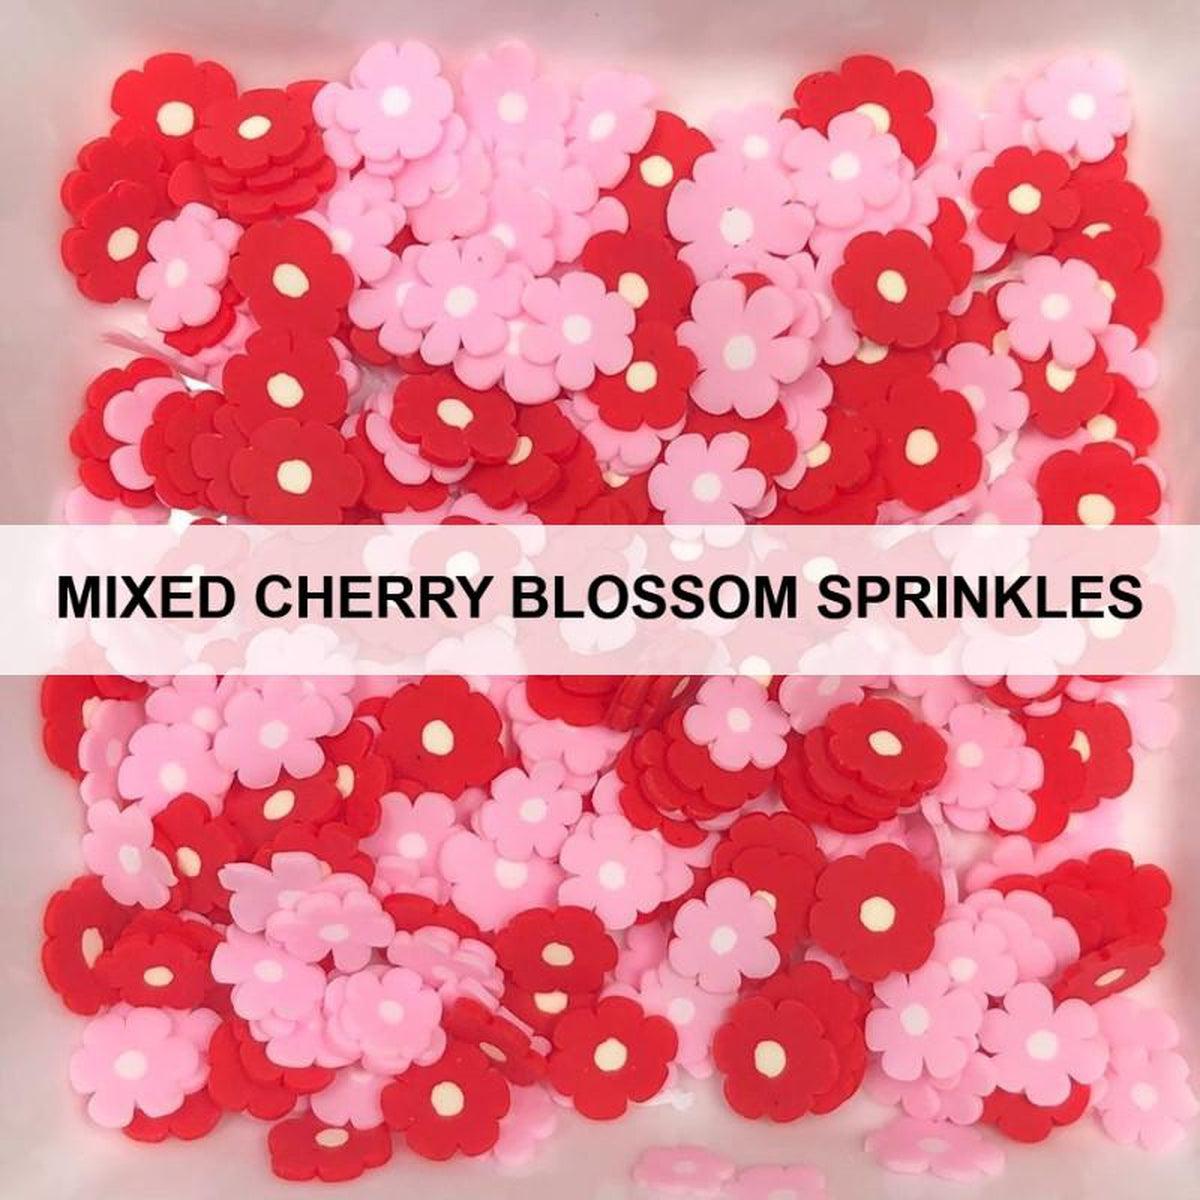 Mixed Cherry Blossom Sprinkles